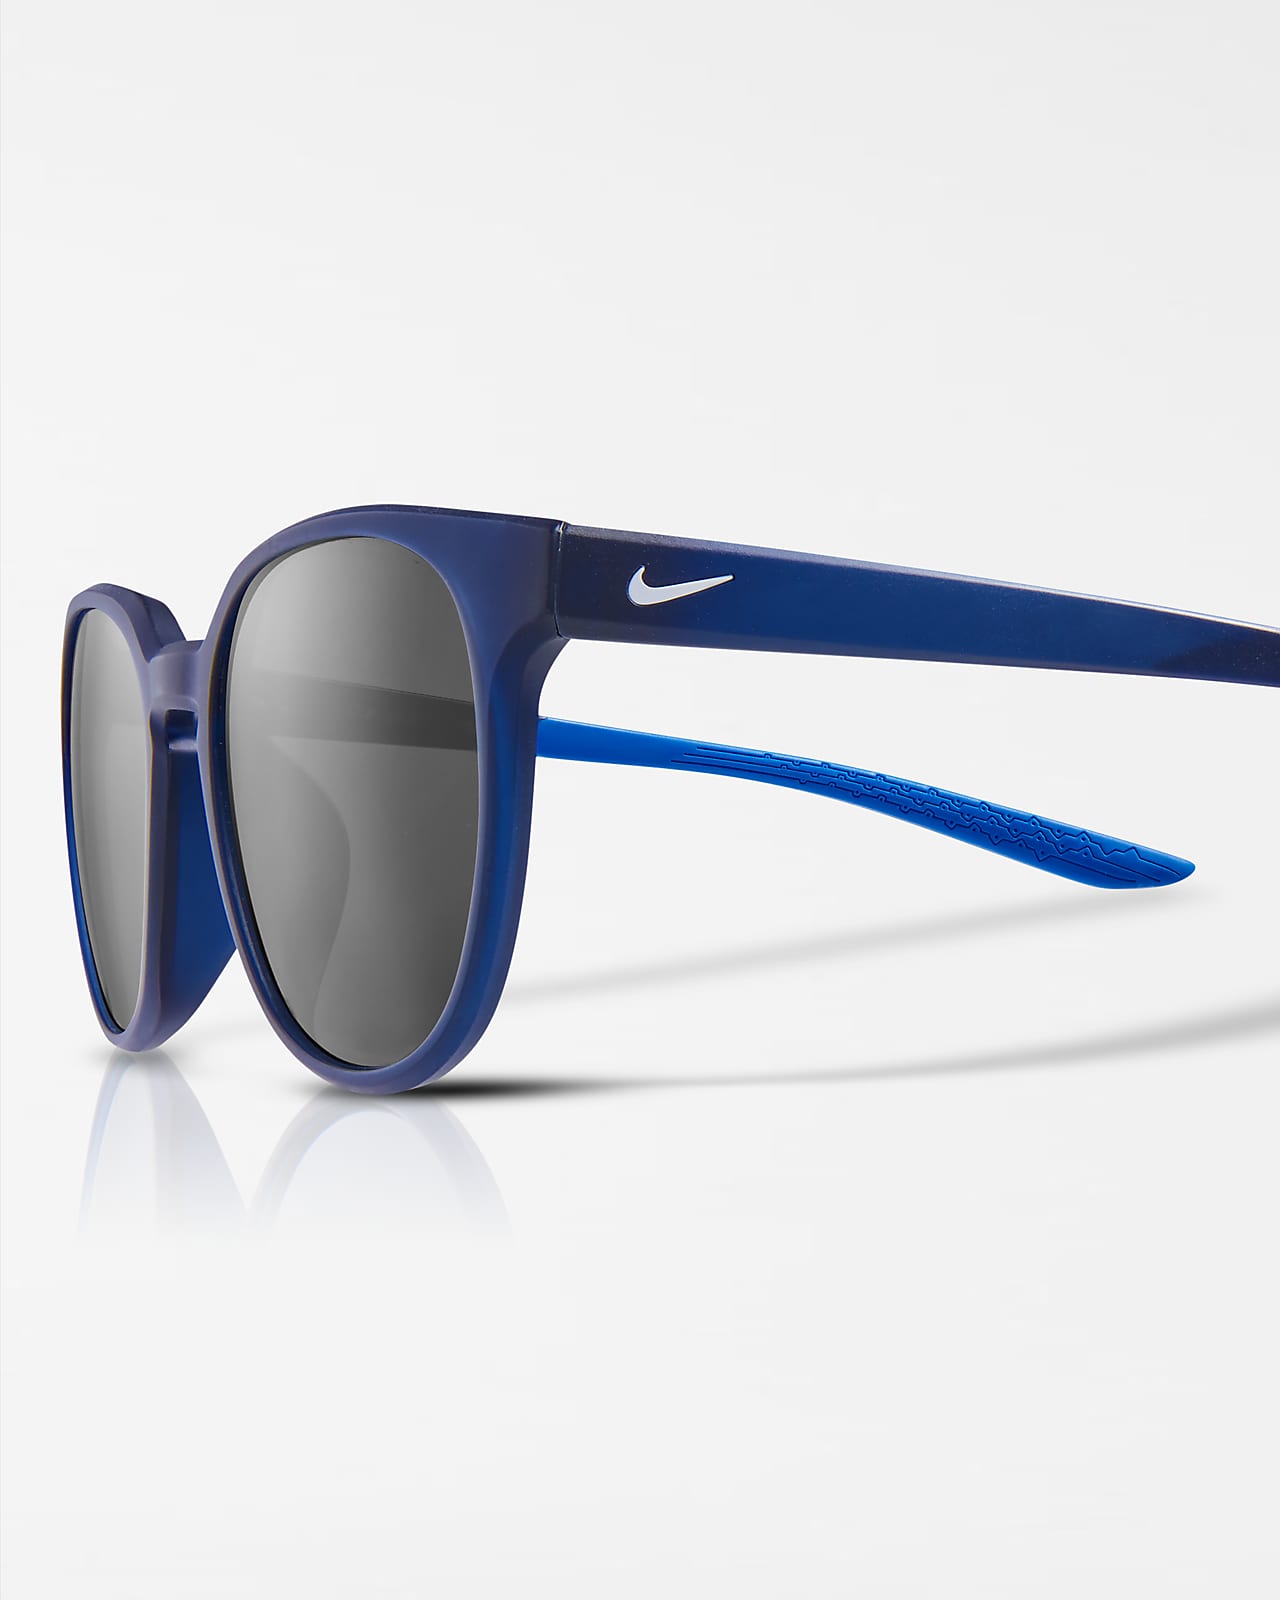 Nike Effect Sunglasses